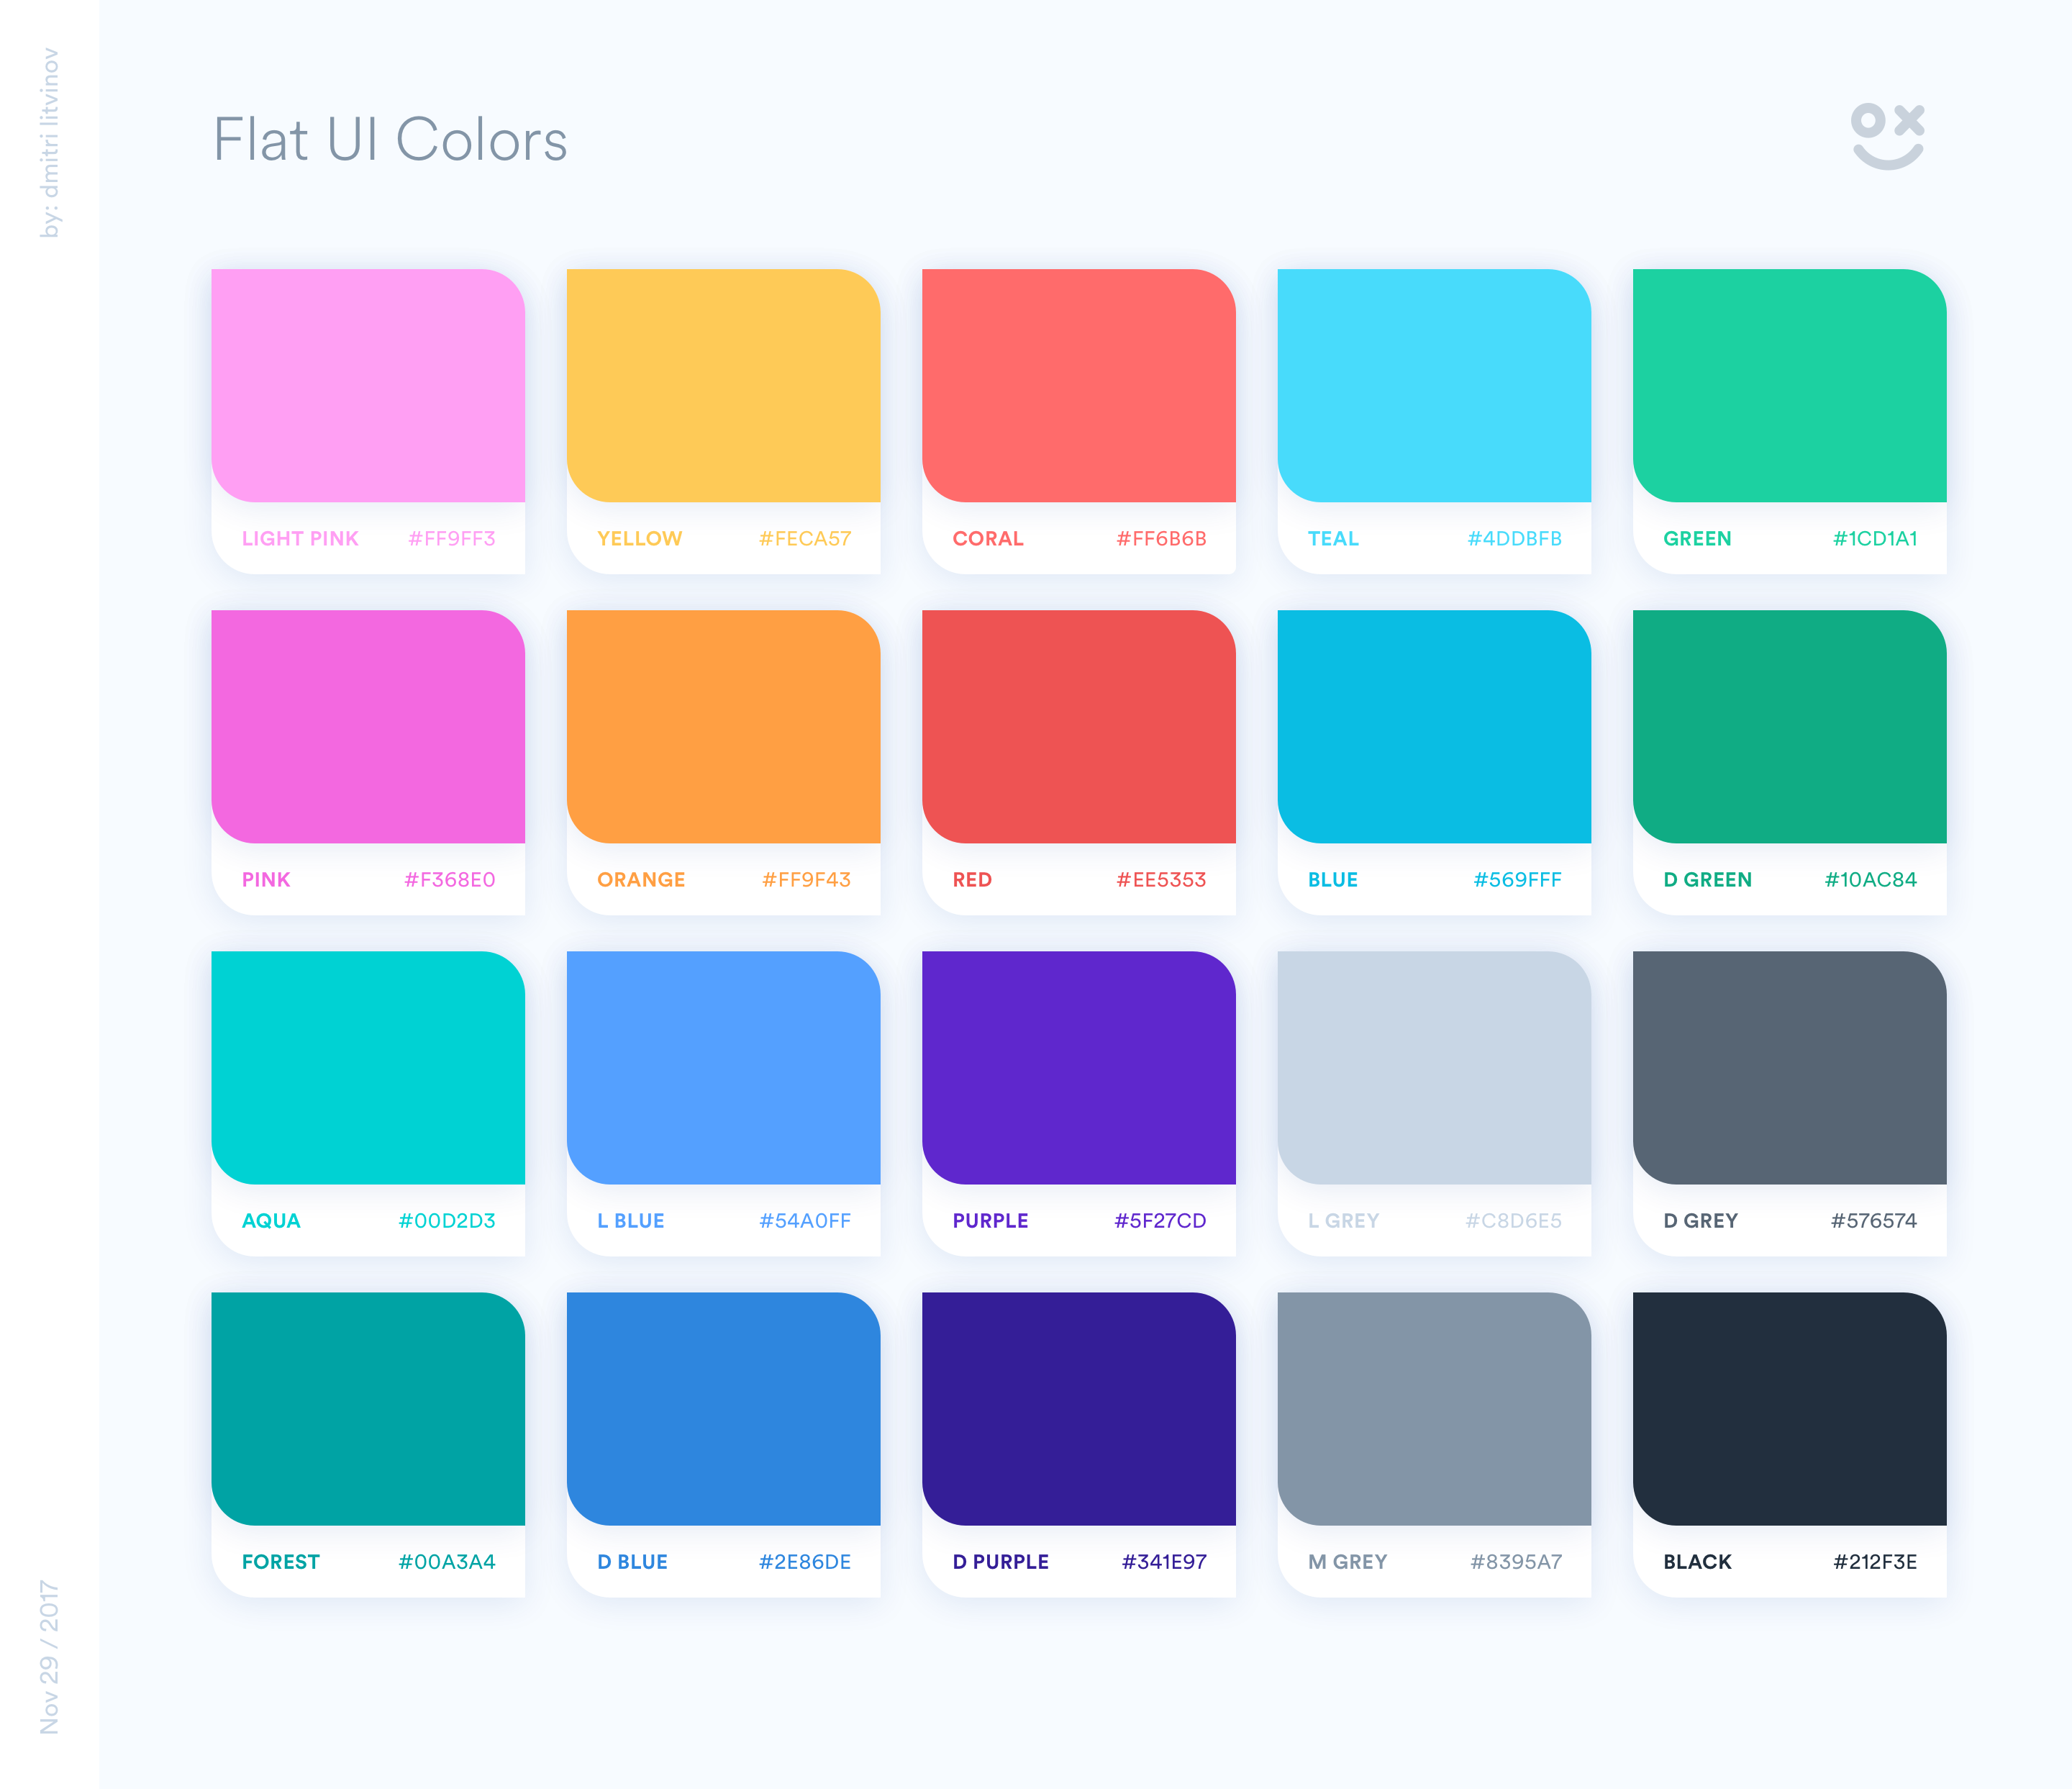 Flat UI Colors 2 🇨🇦 by Dmitri Litvinov on Dribbble